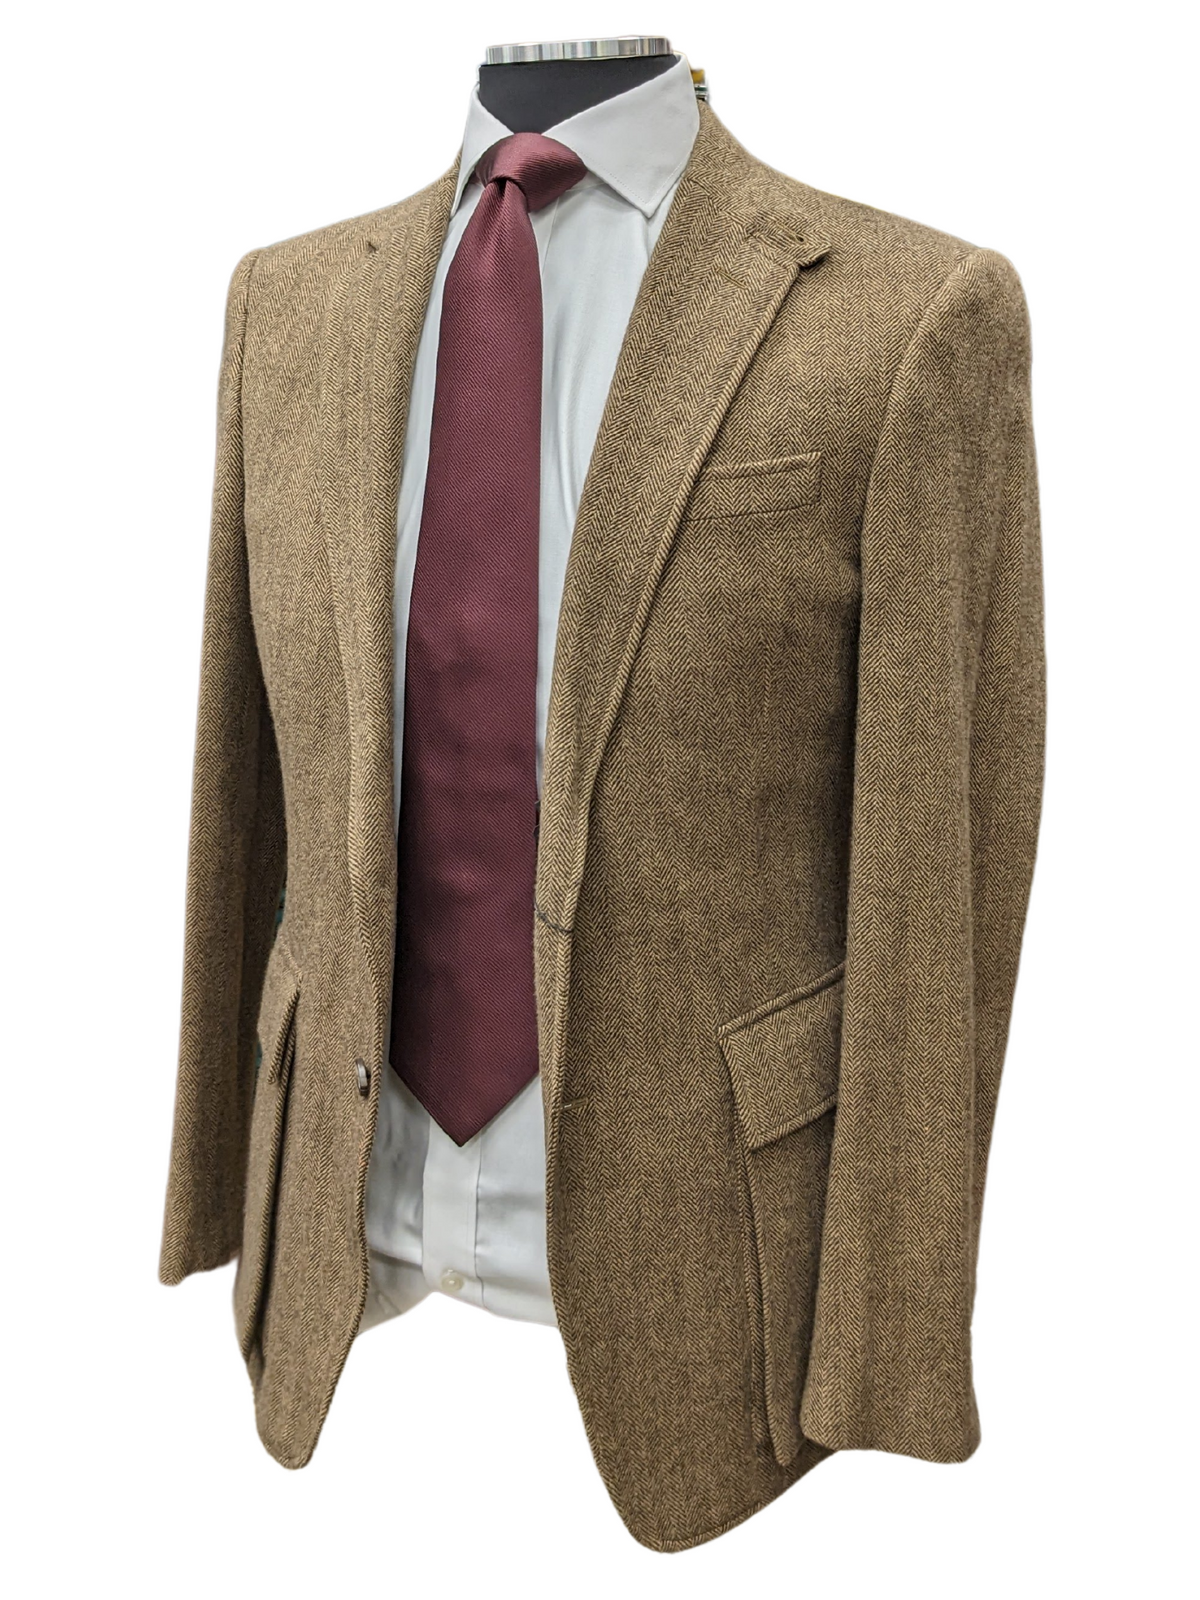 Ralph Lauren Purple Label 38R Extra Slim Fit Brown Herringbone 100% Wool 2 Piece Suit